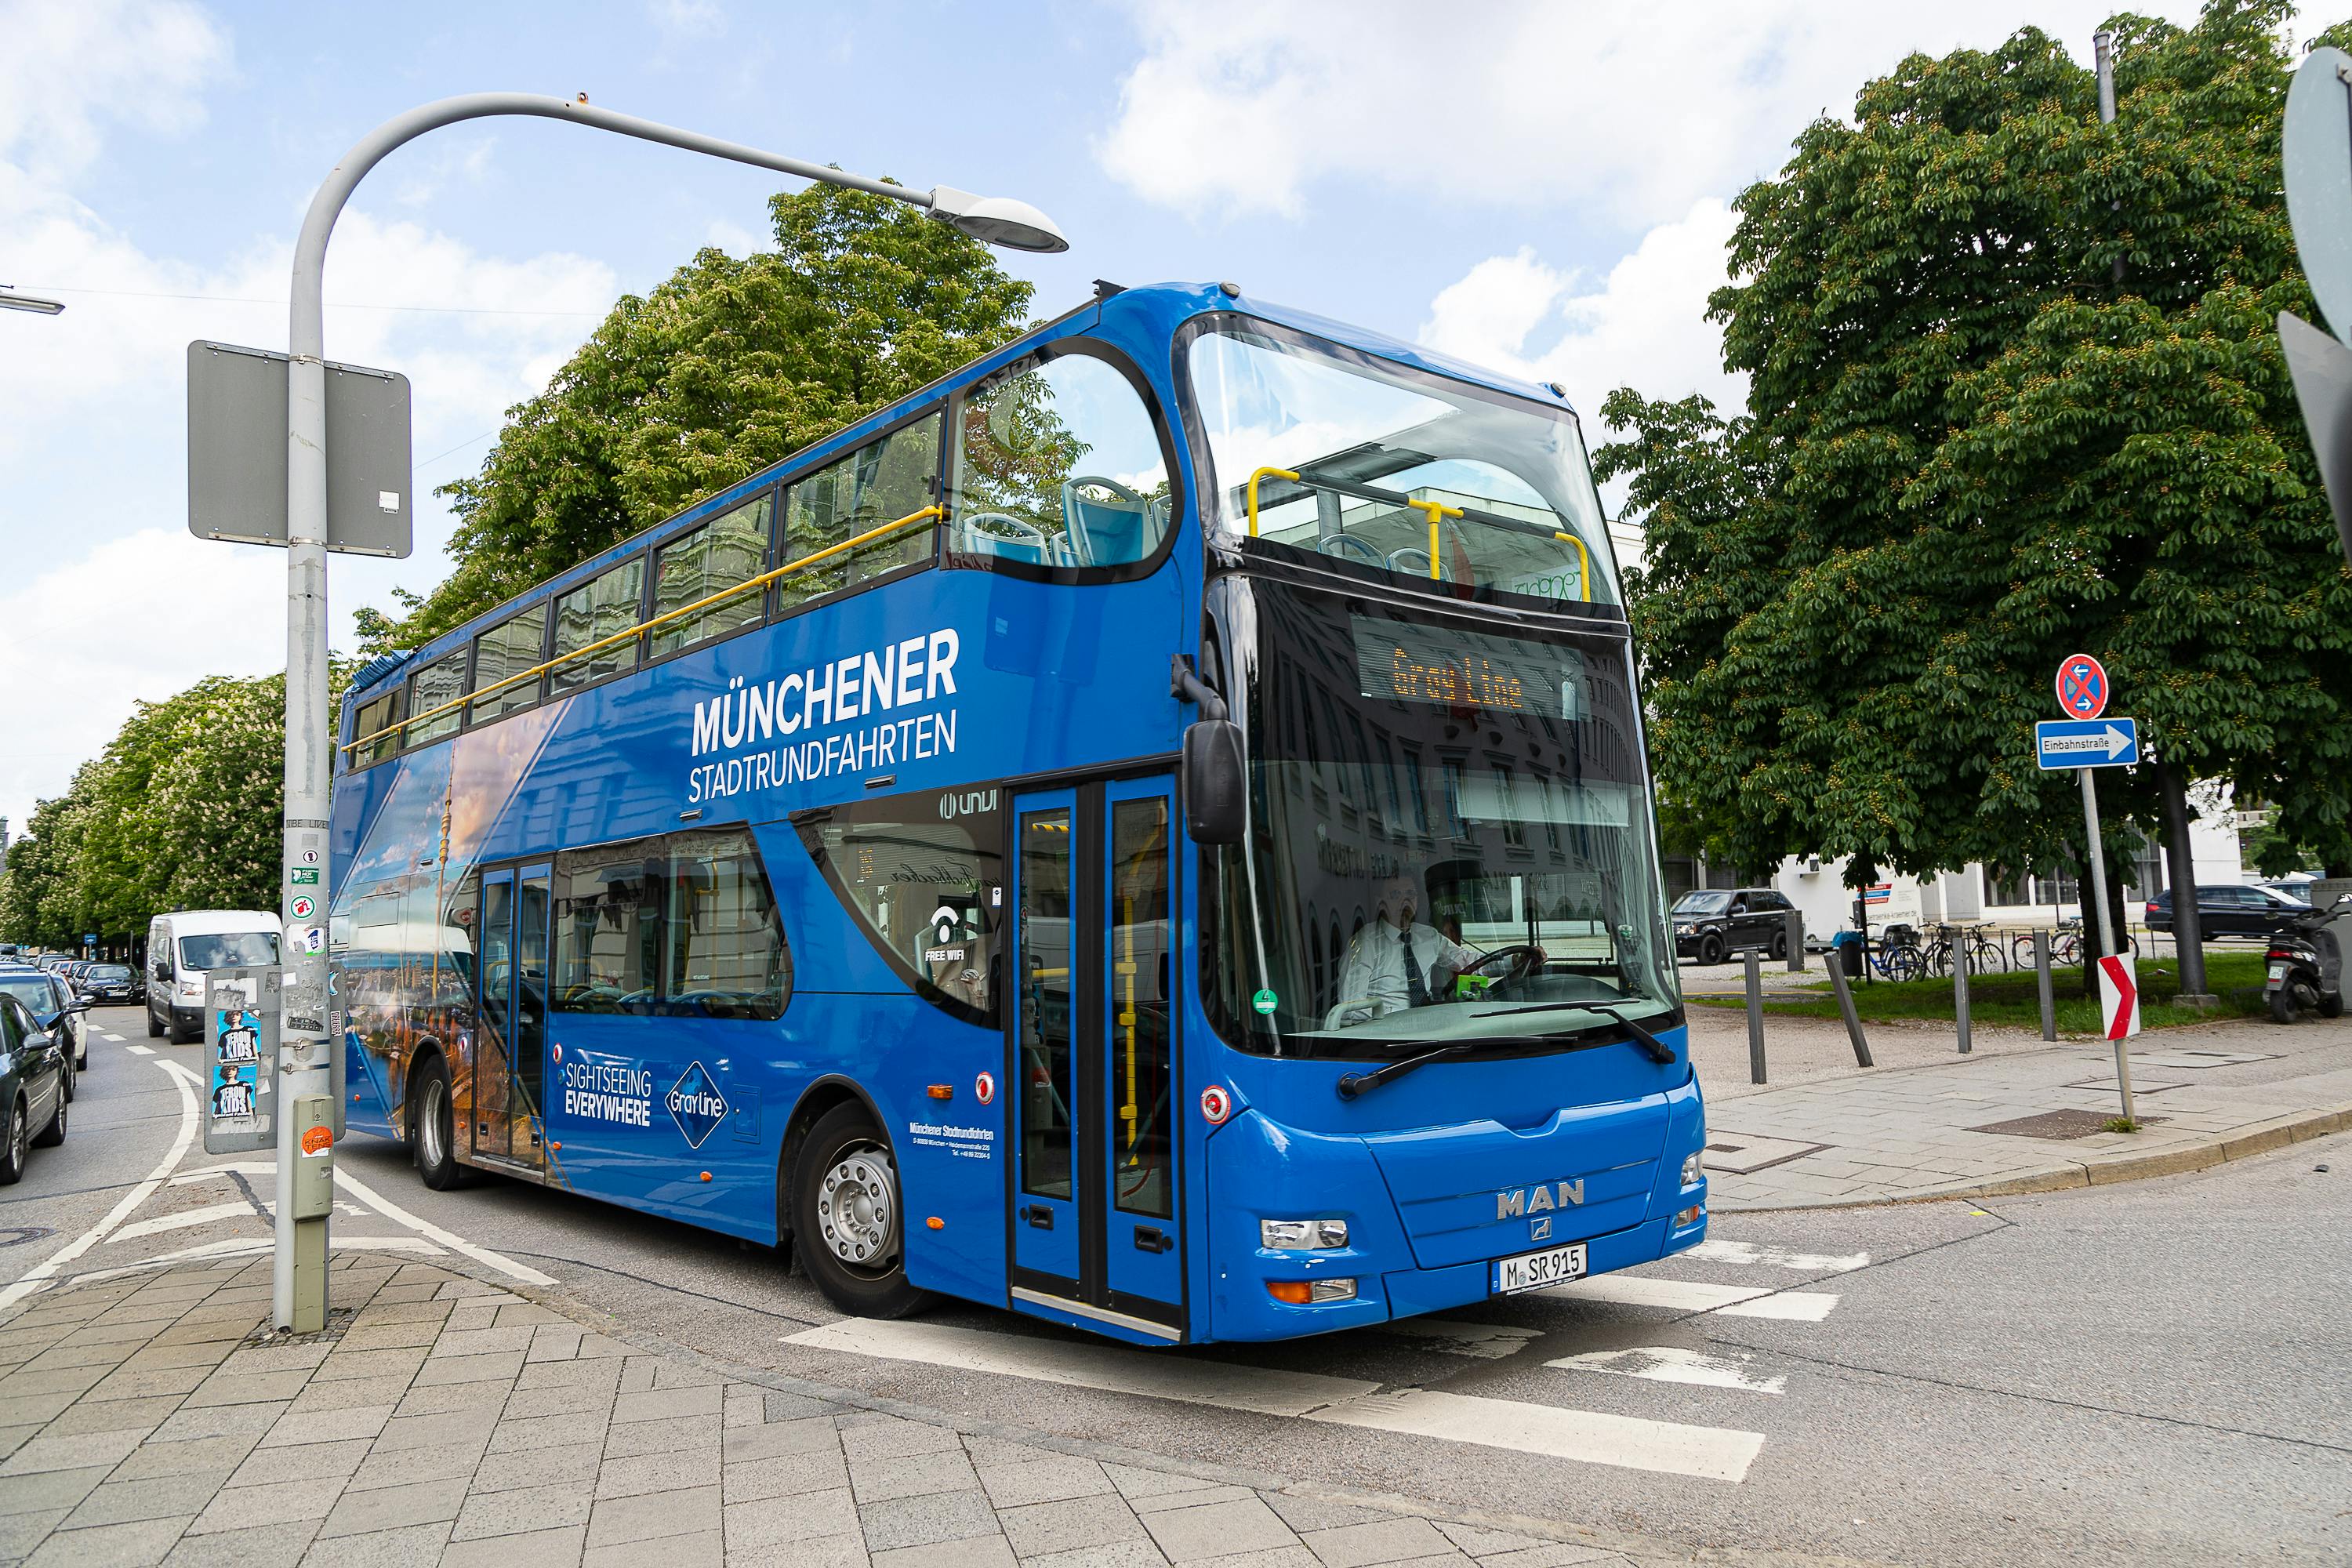 24-hour grand hop-on hop-off bus tour of Munich